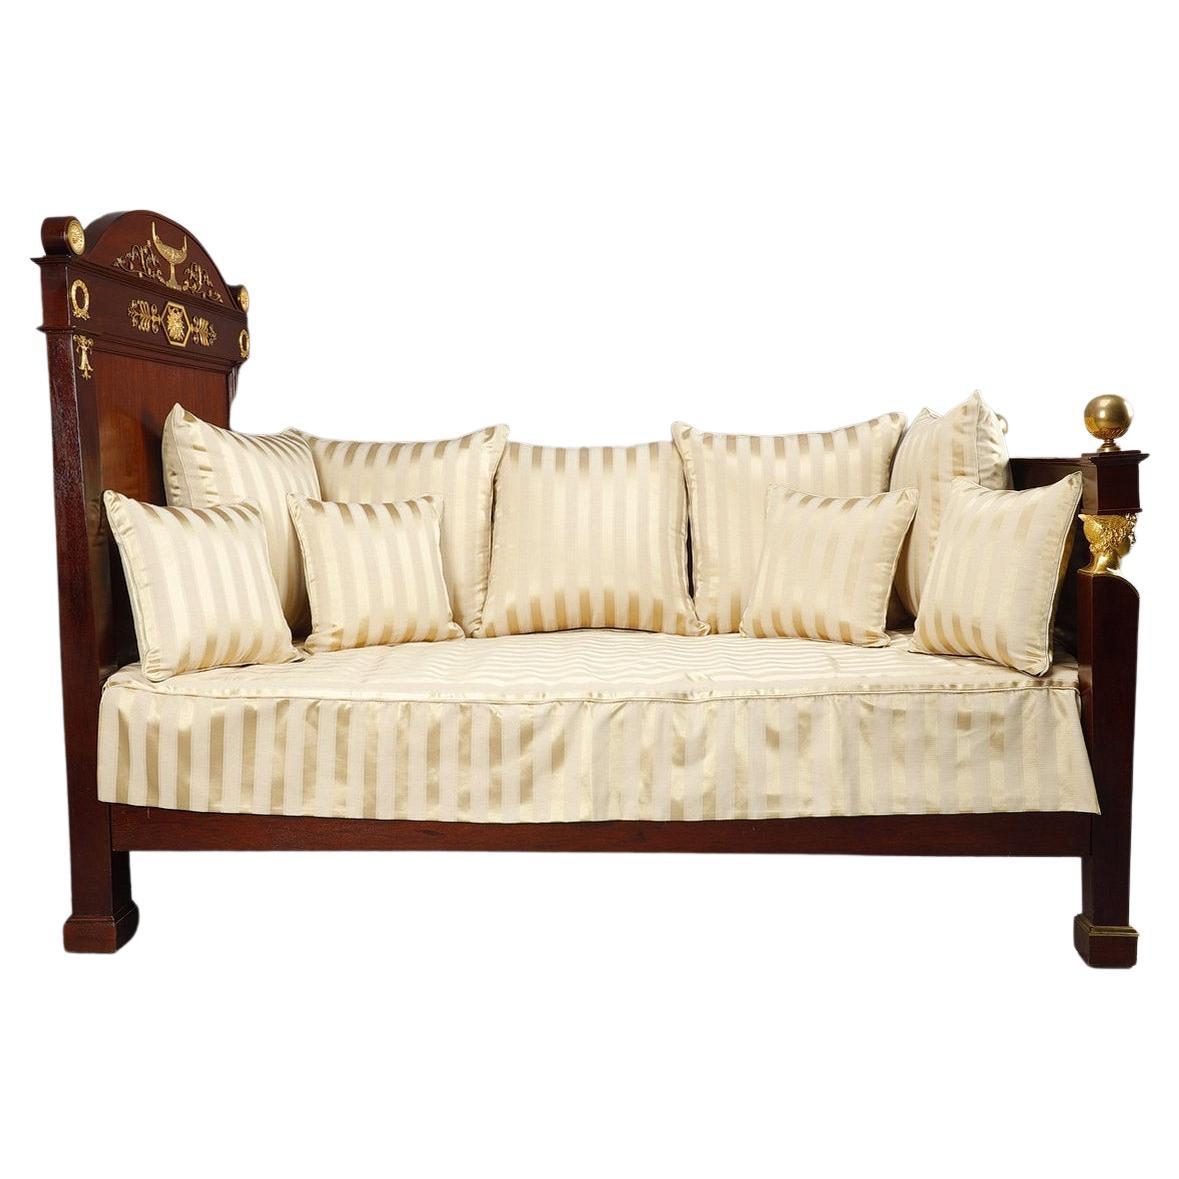 Empire Period Mahogany Sofa-Bed, 19th Century For Sale